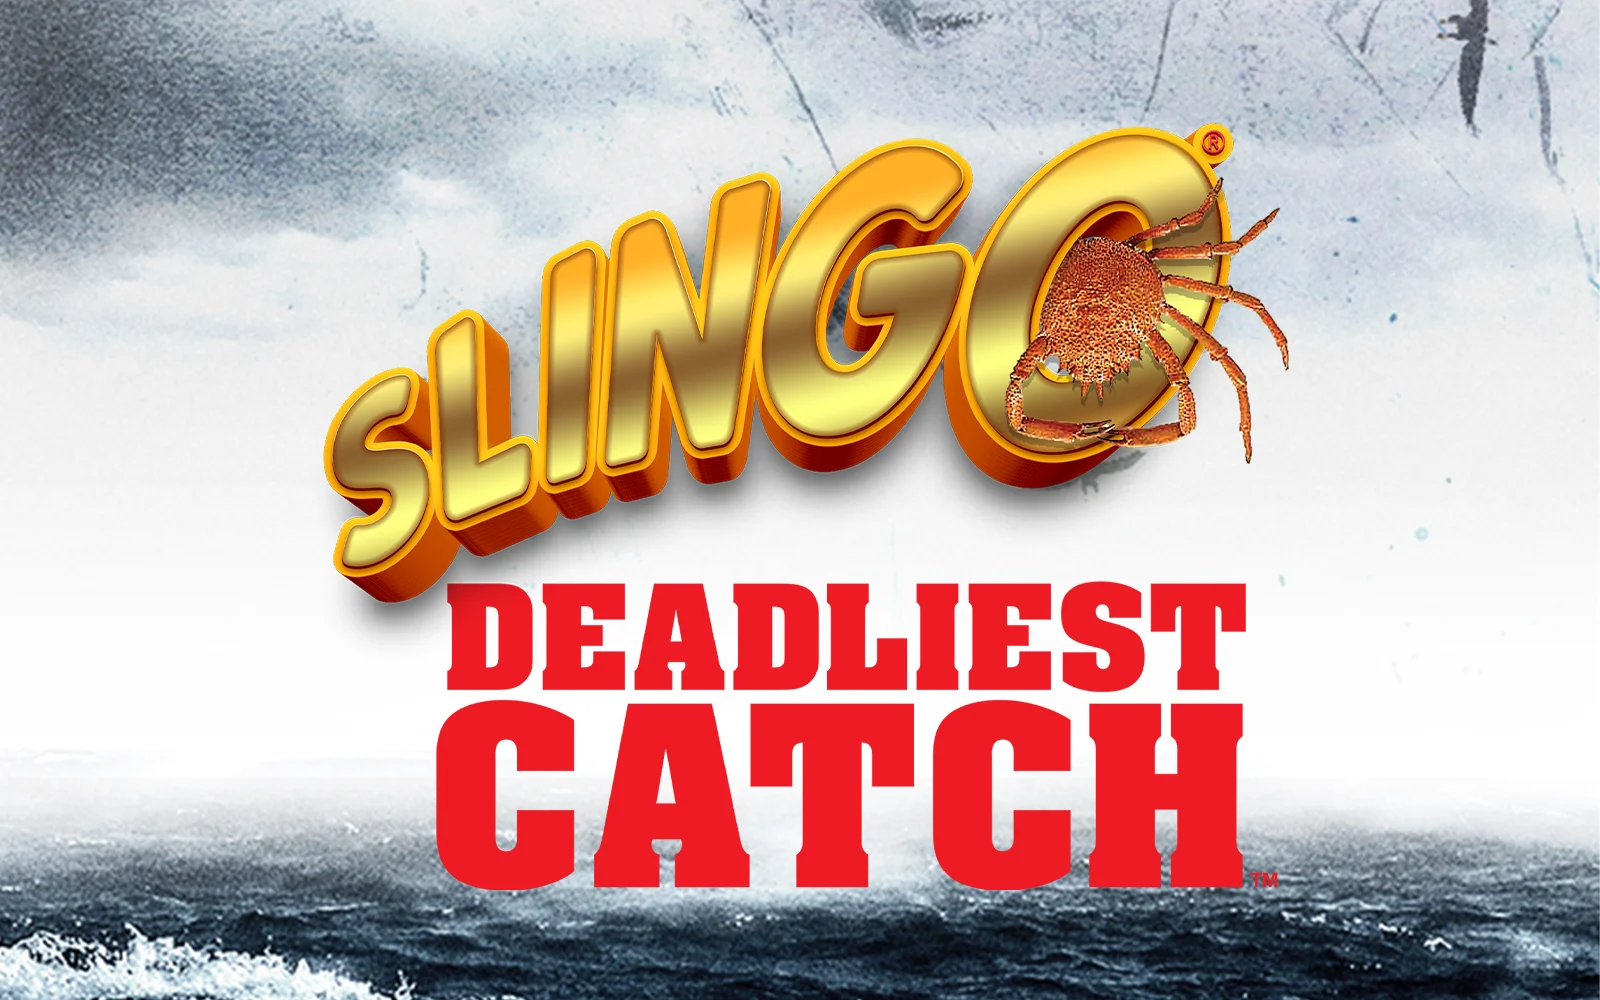 Gioca a Slingo Deadliest Catch sul casino online Starcasino.be